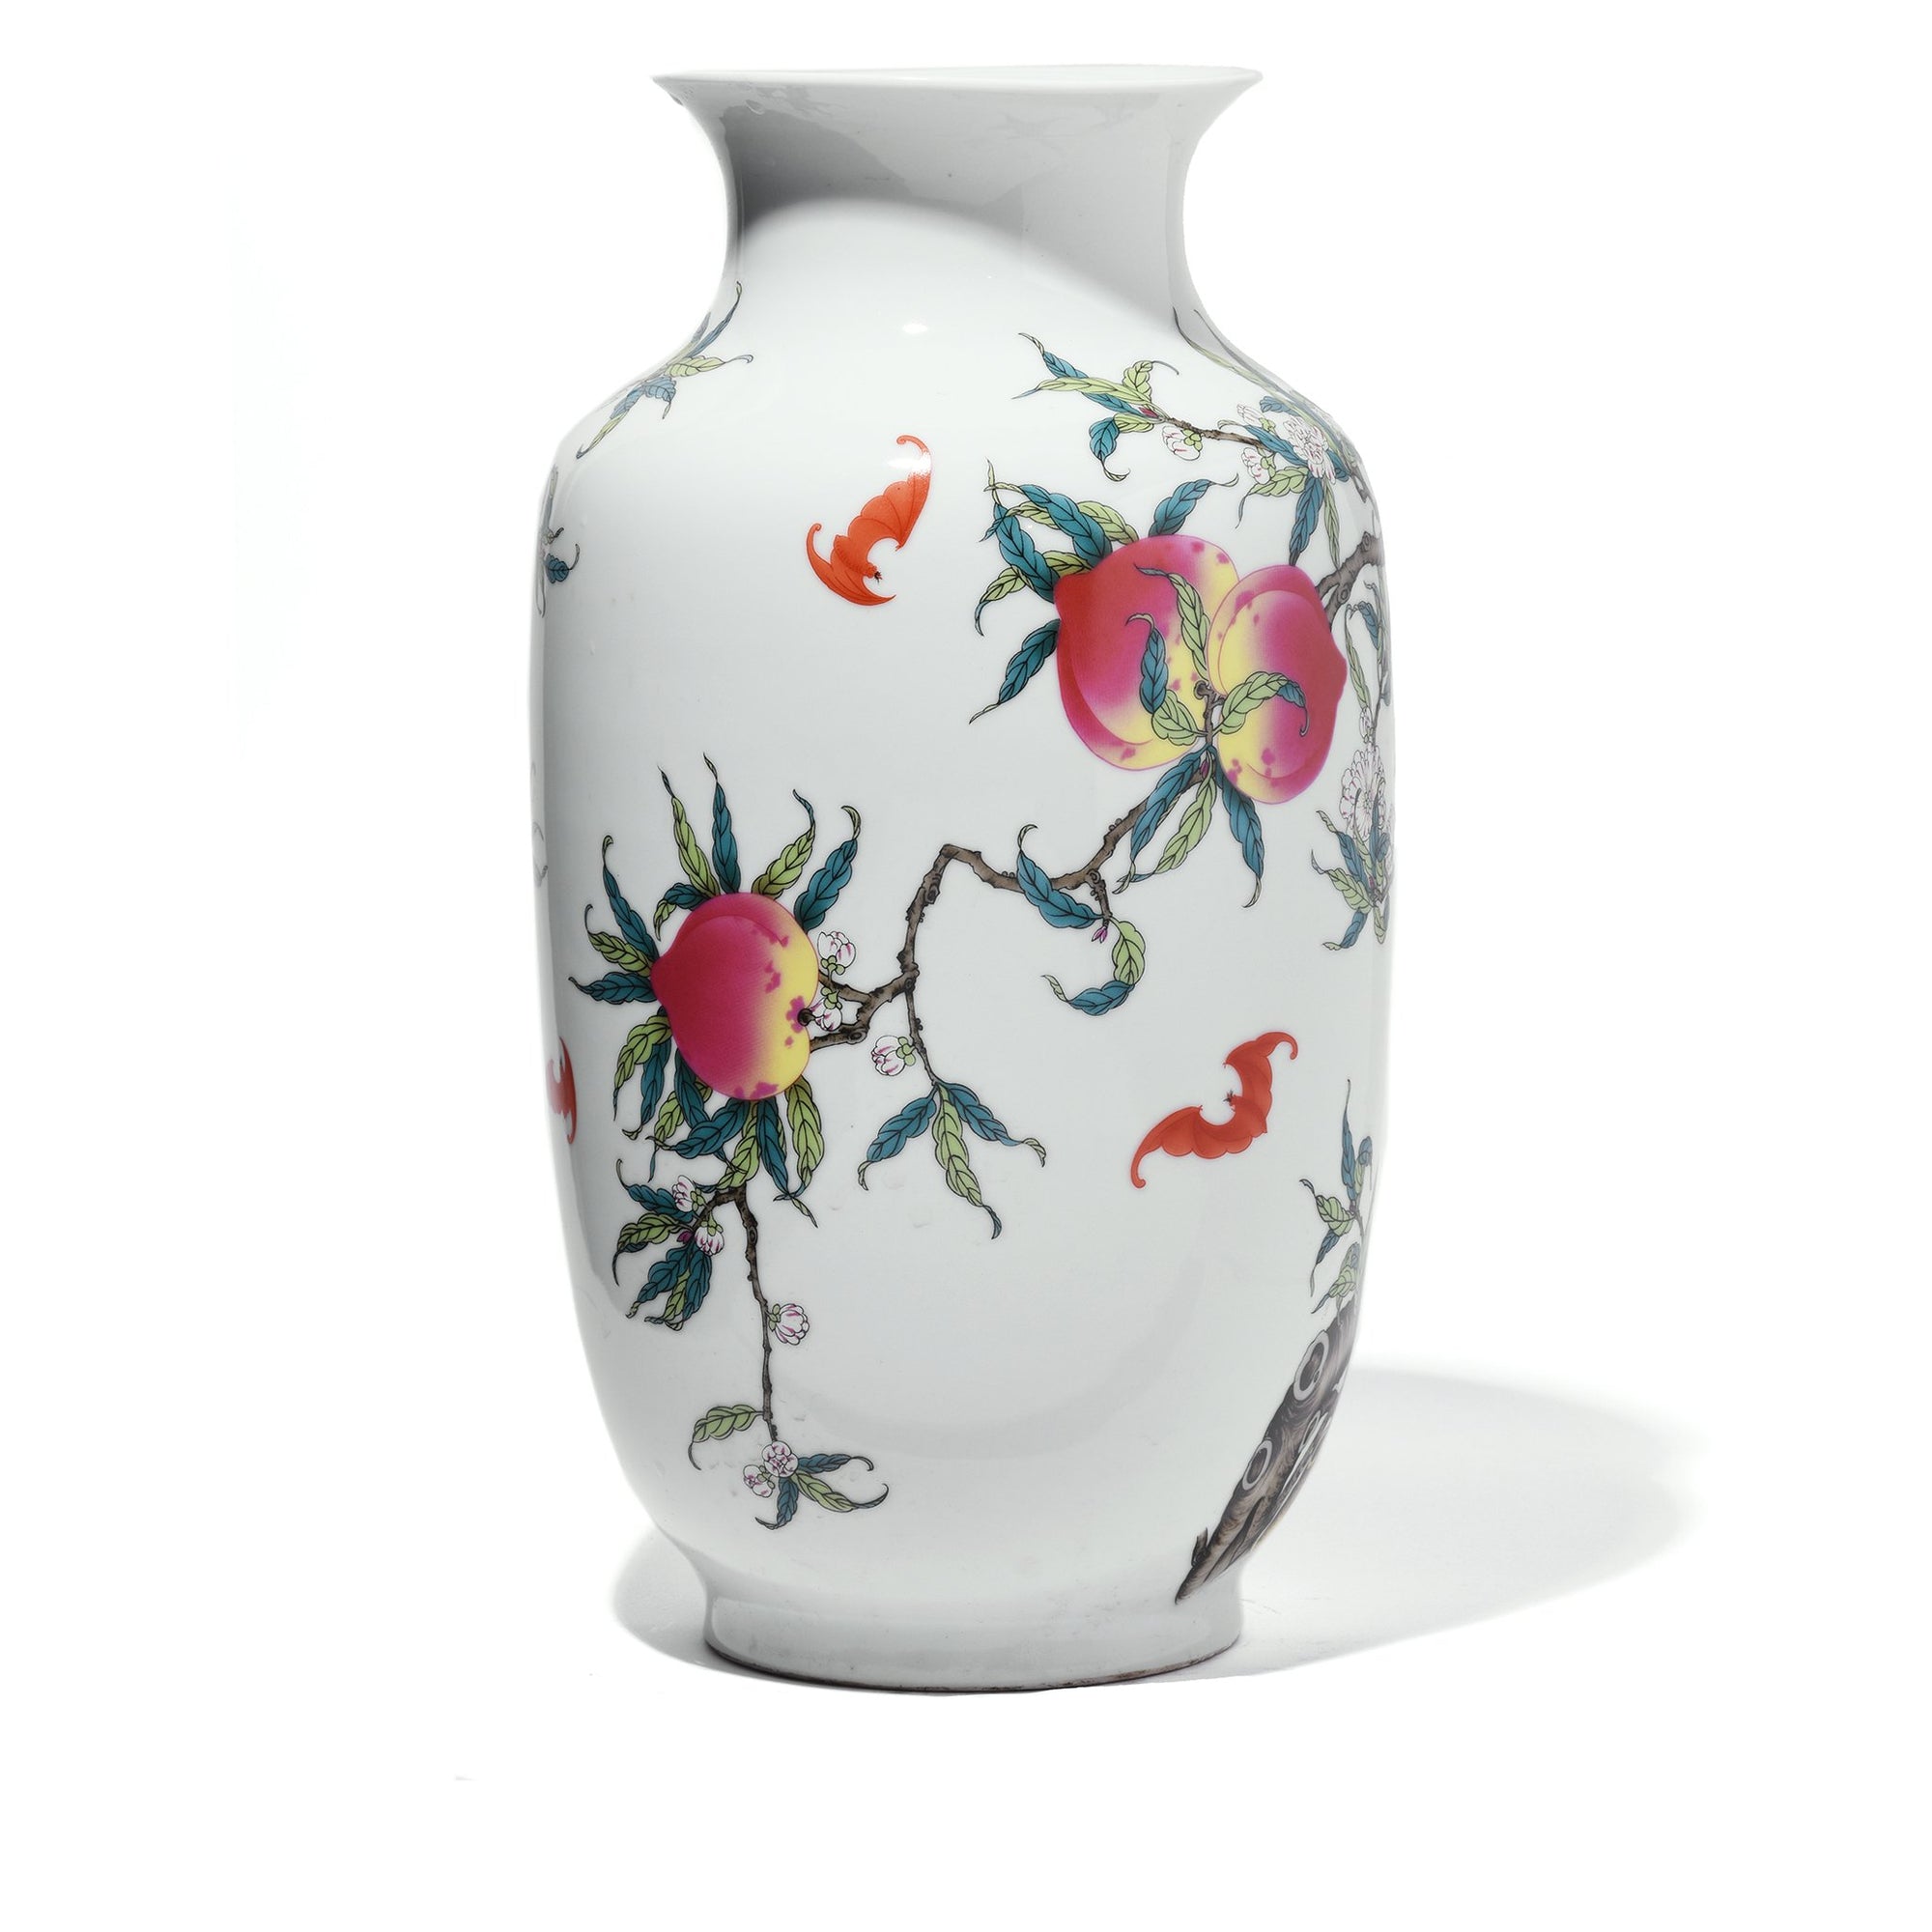 Chinese Reproduction Porcelain Rouleau Vase - Five Peach Design